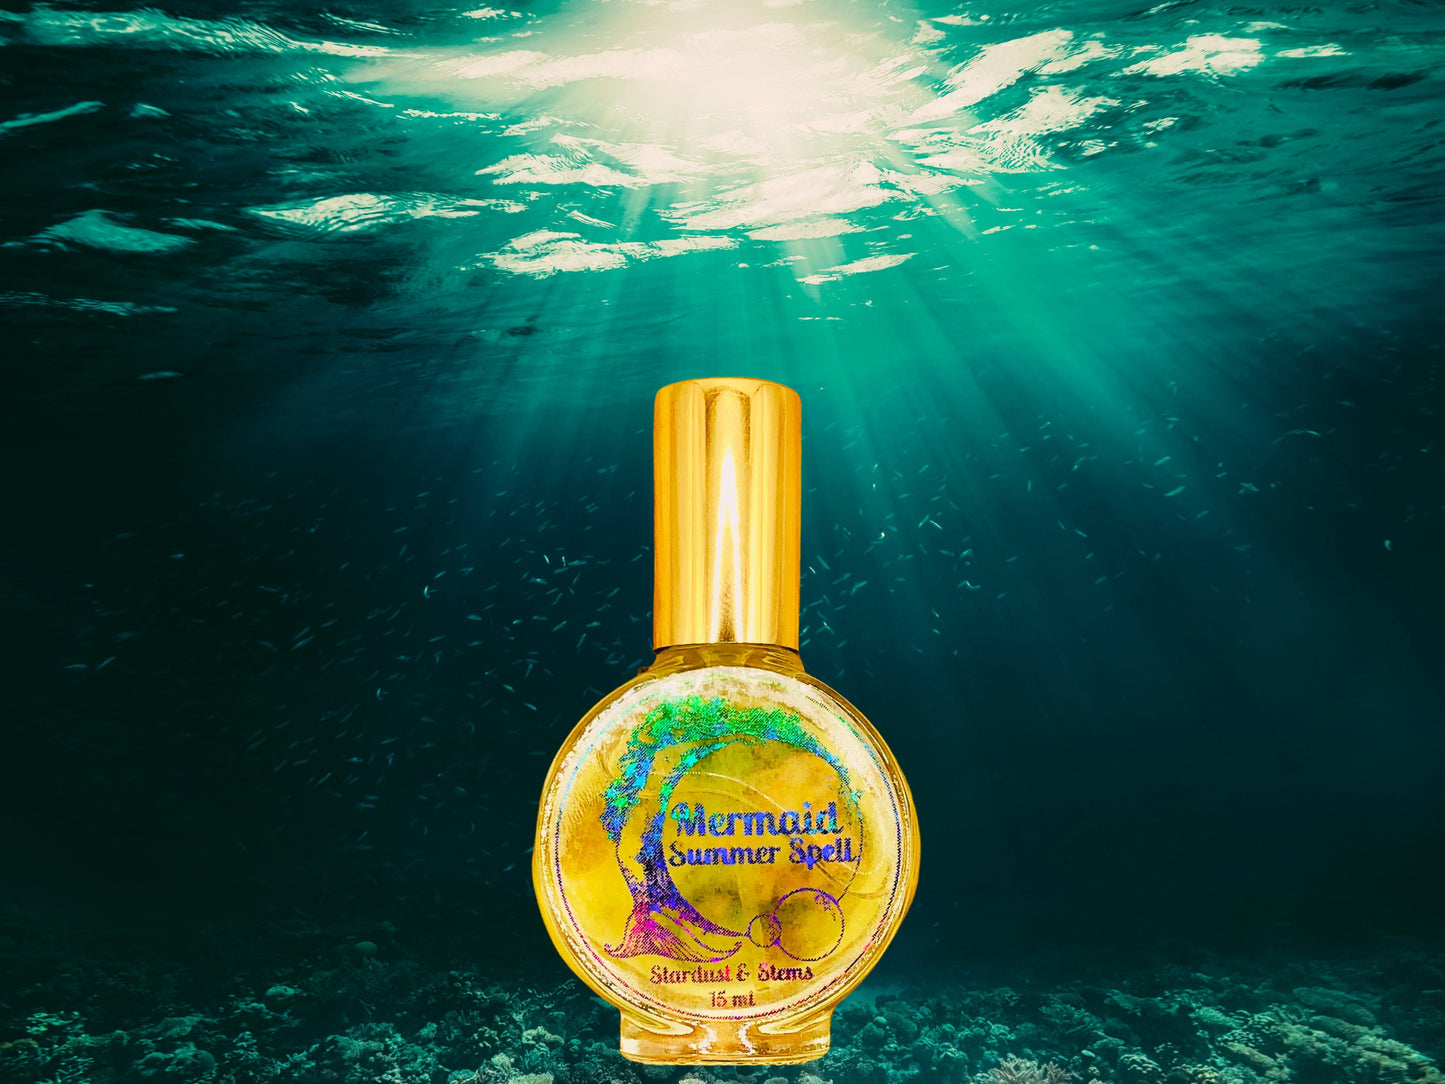 Mermaid Summer Spell Perfume, Best Vanilla Aquatic Scent, Essential Oil Indie Fragrance, Witch Perfume, Crystal Mermaid Crown & Shell Gifts